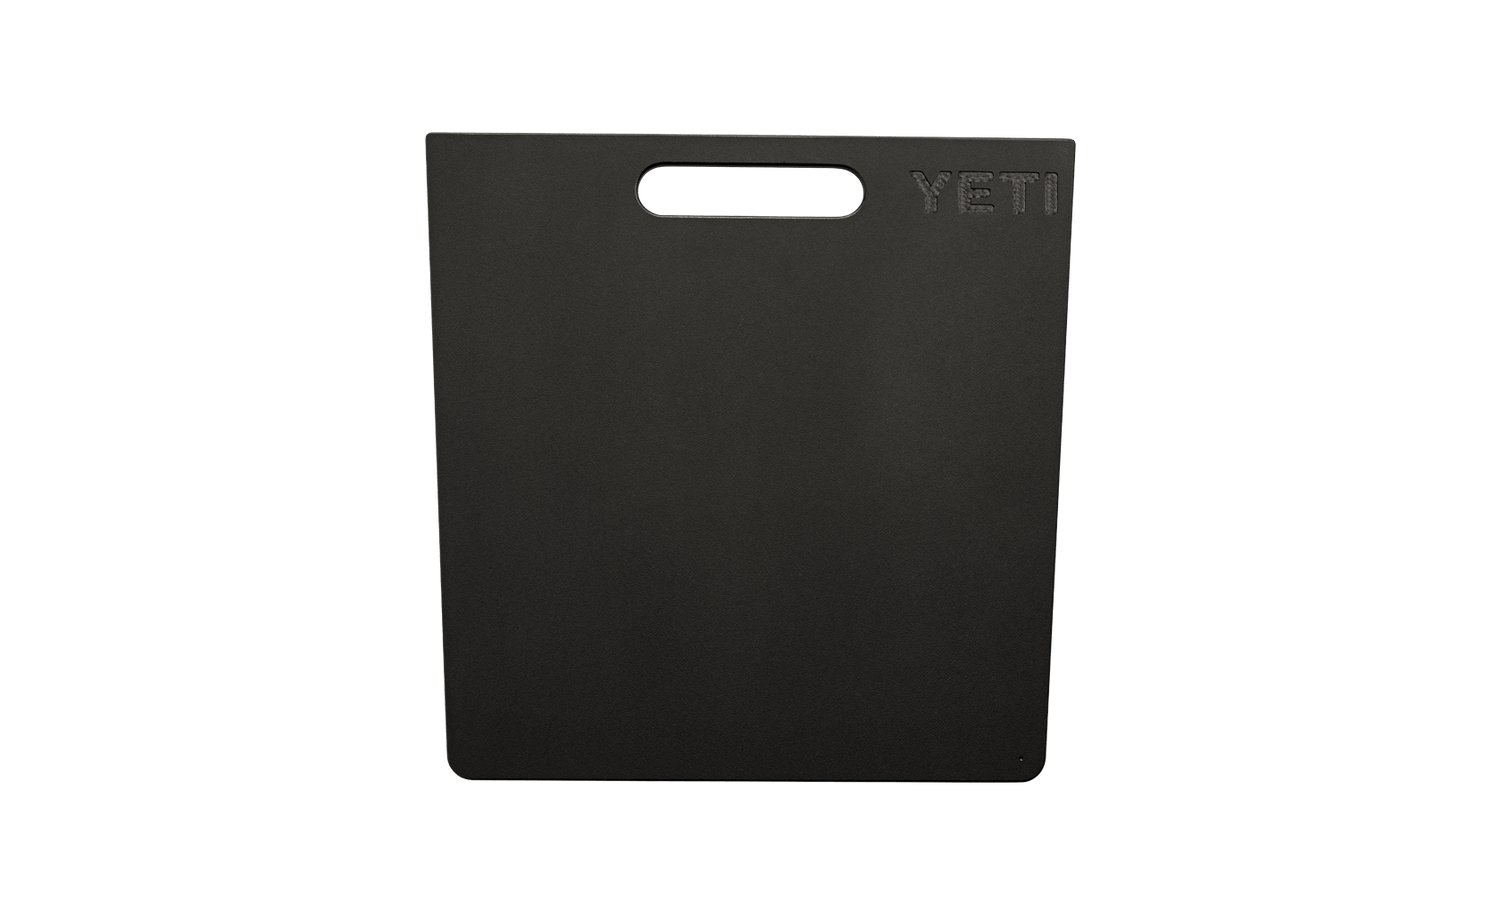 YETI Tundra® Cool Box Dividers